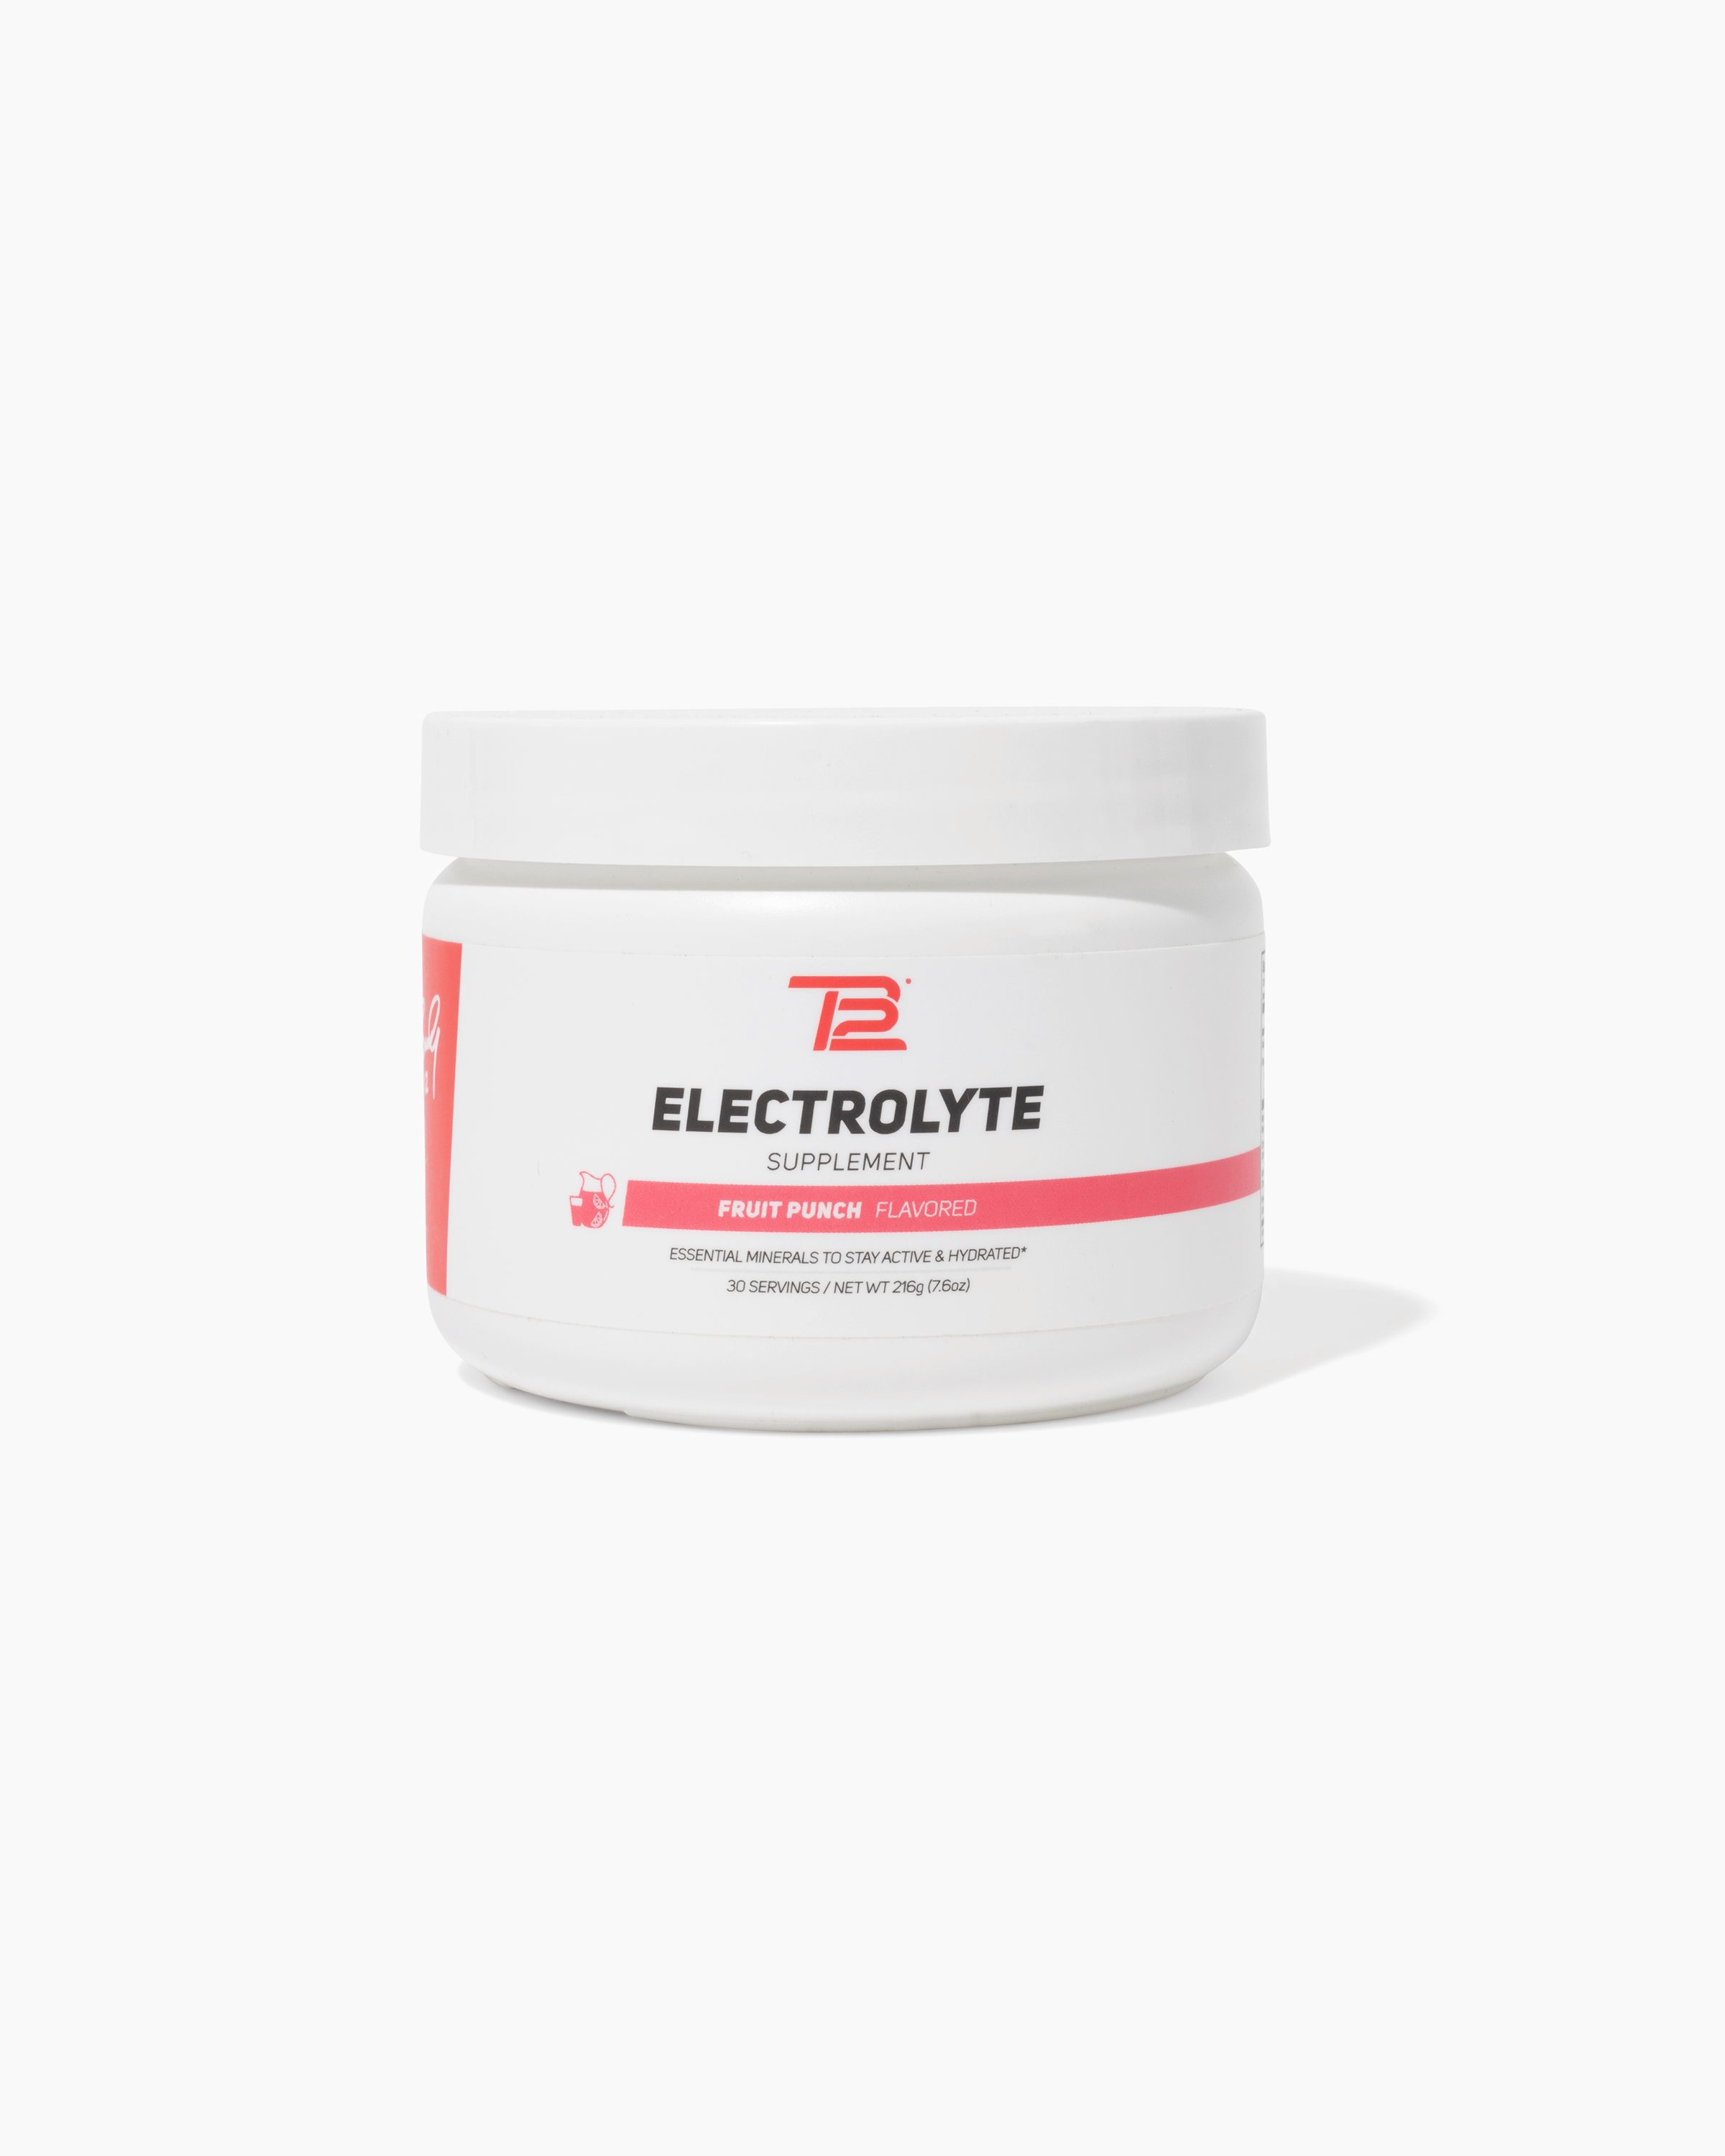 TB12 Electrolytes